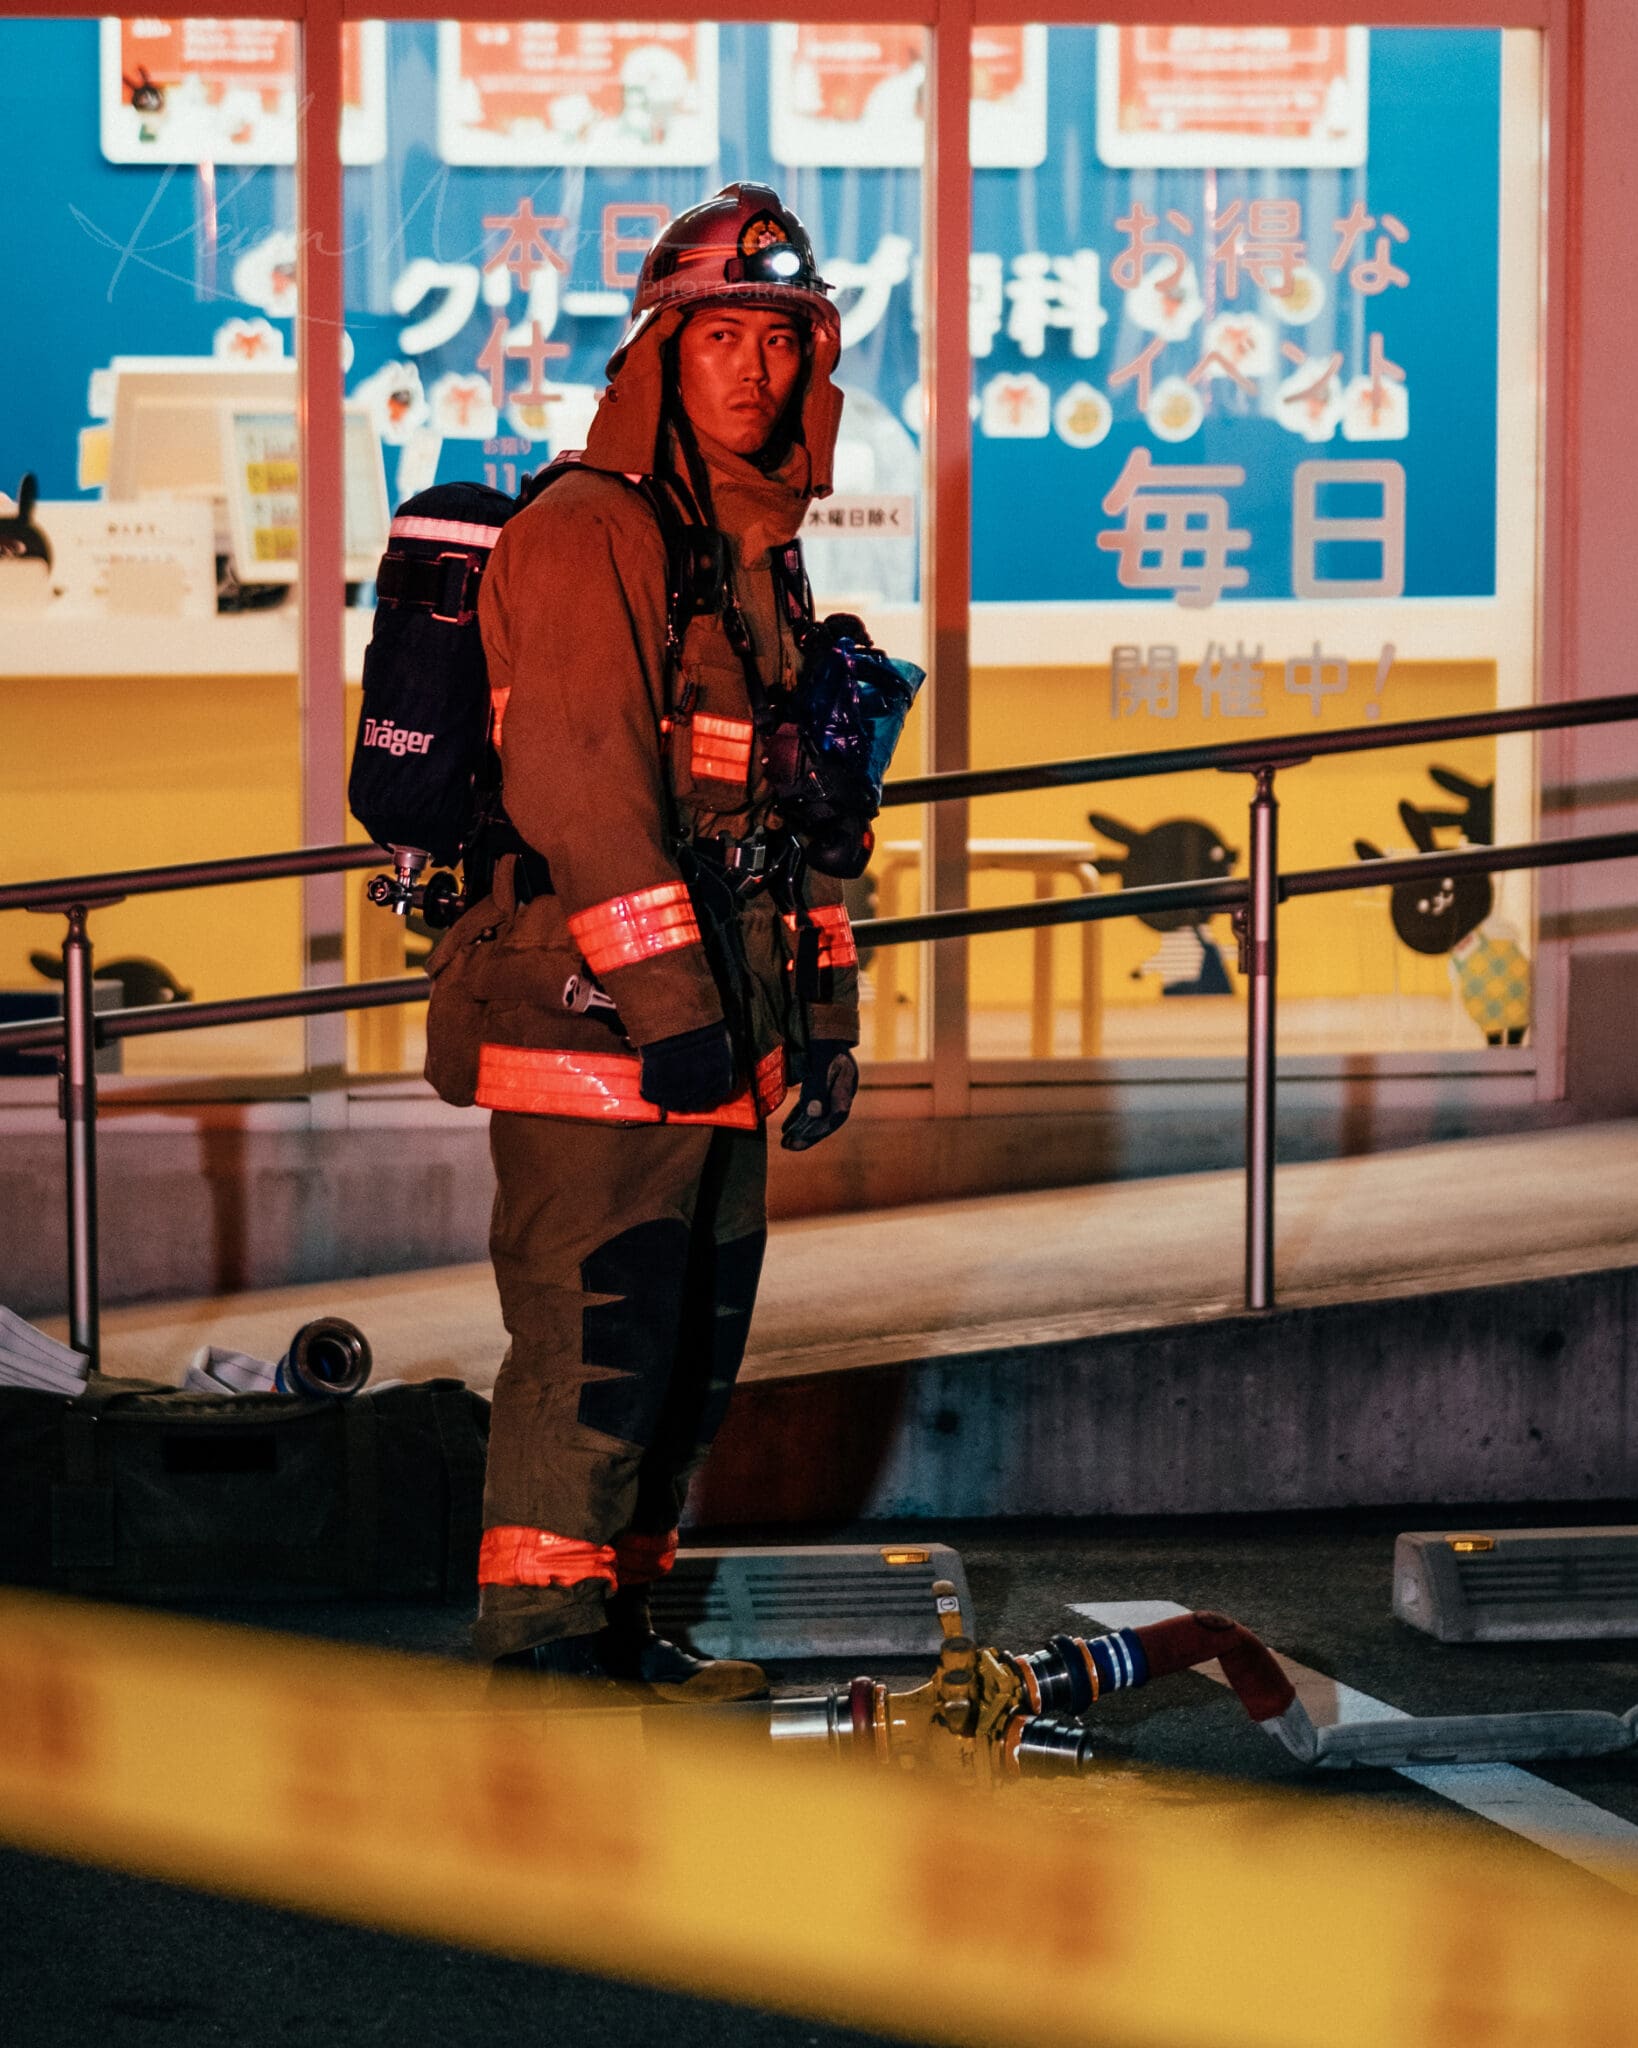 Japanese firefighter in full gear vigilantly monitoring evening urban scene.